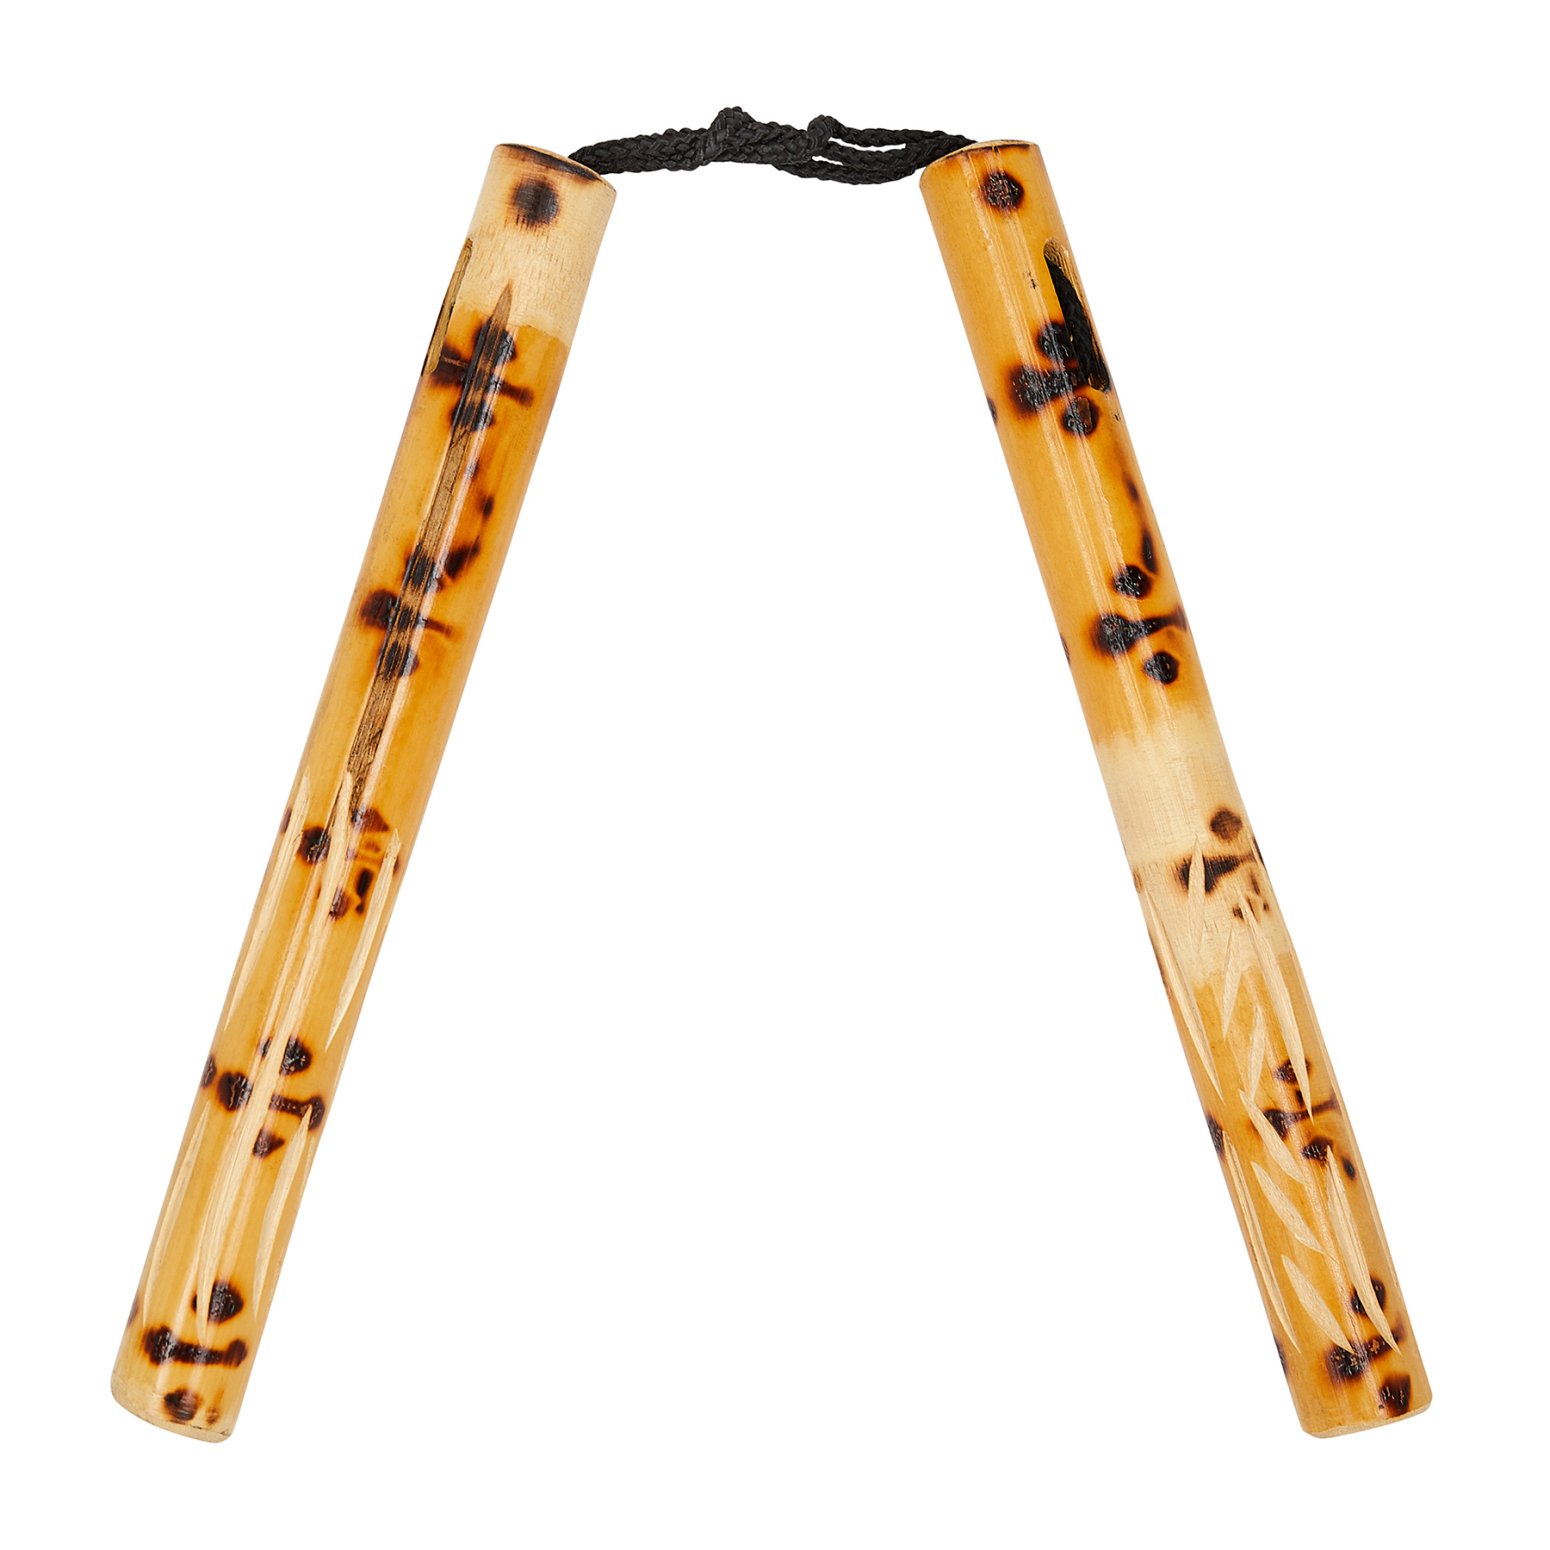 NR-070: Nunchaku Bamboo Tiger Cane / Skin W/ Cord - Click Image to Close